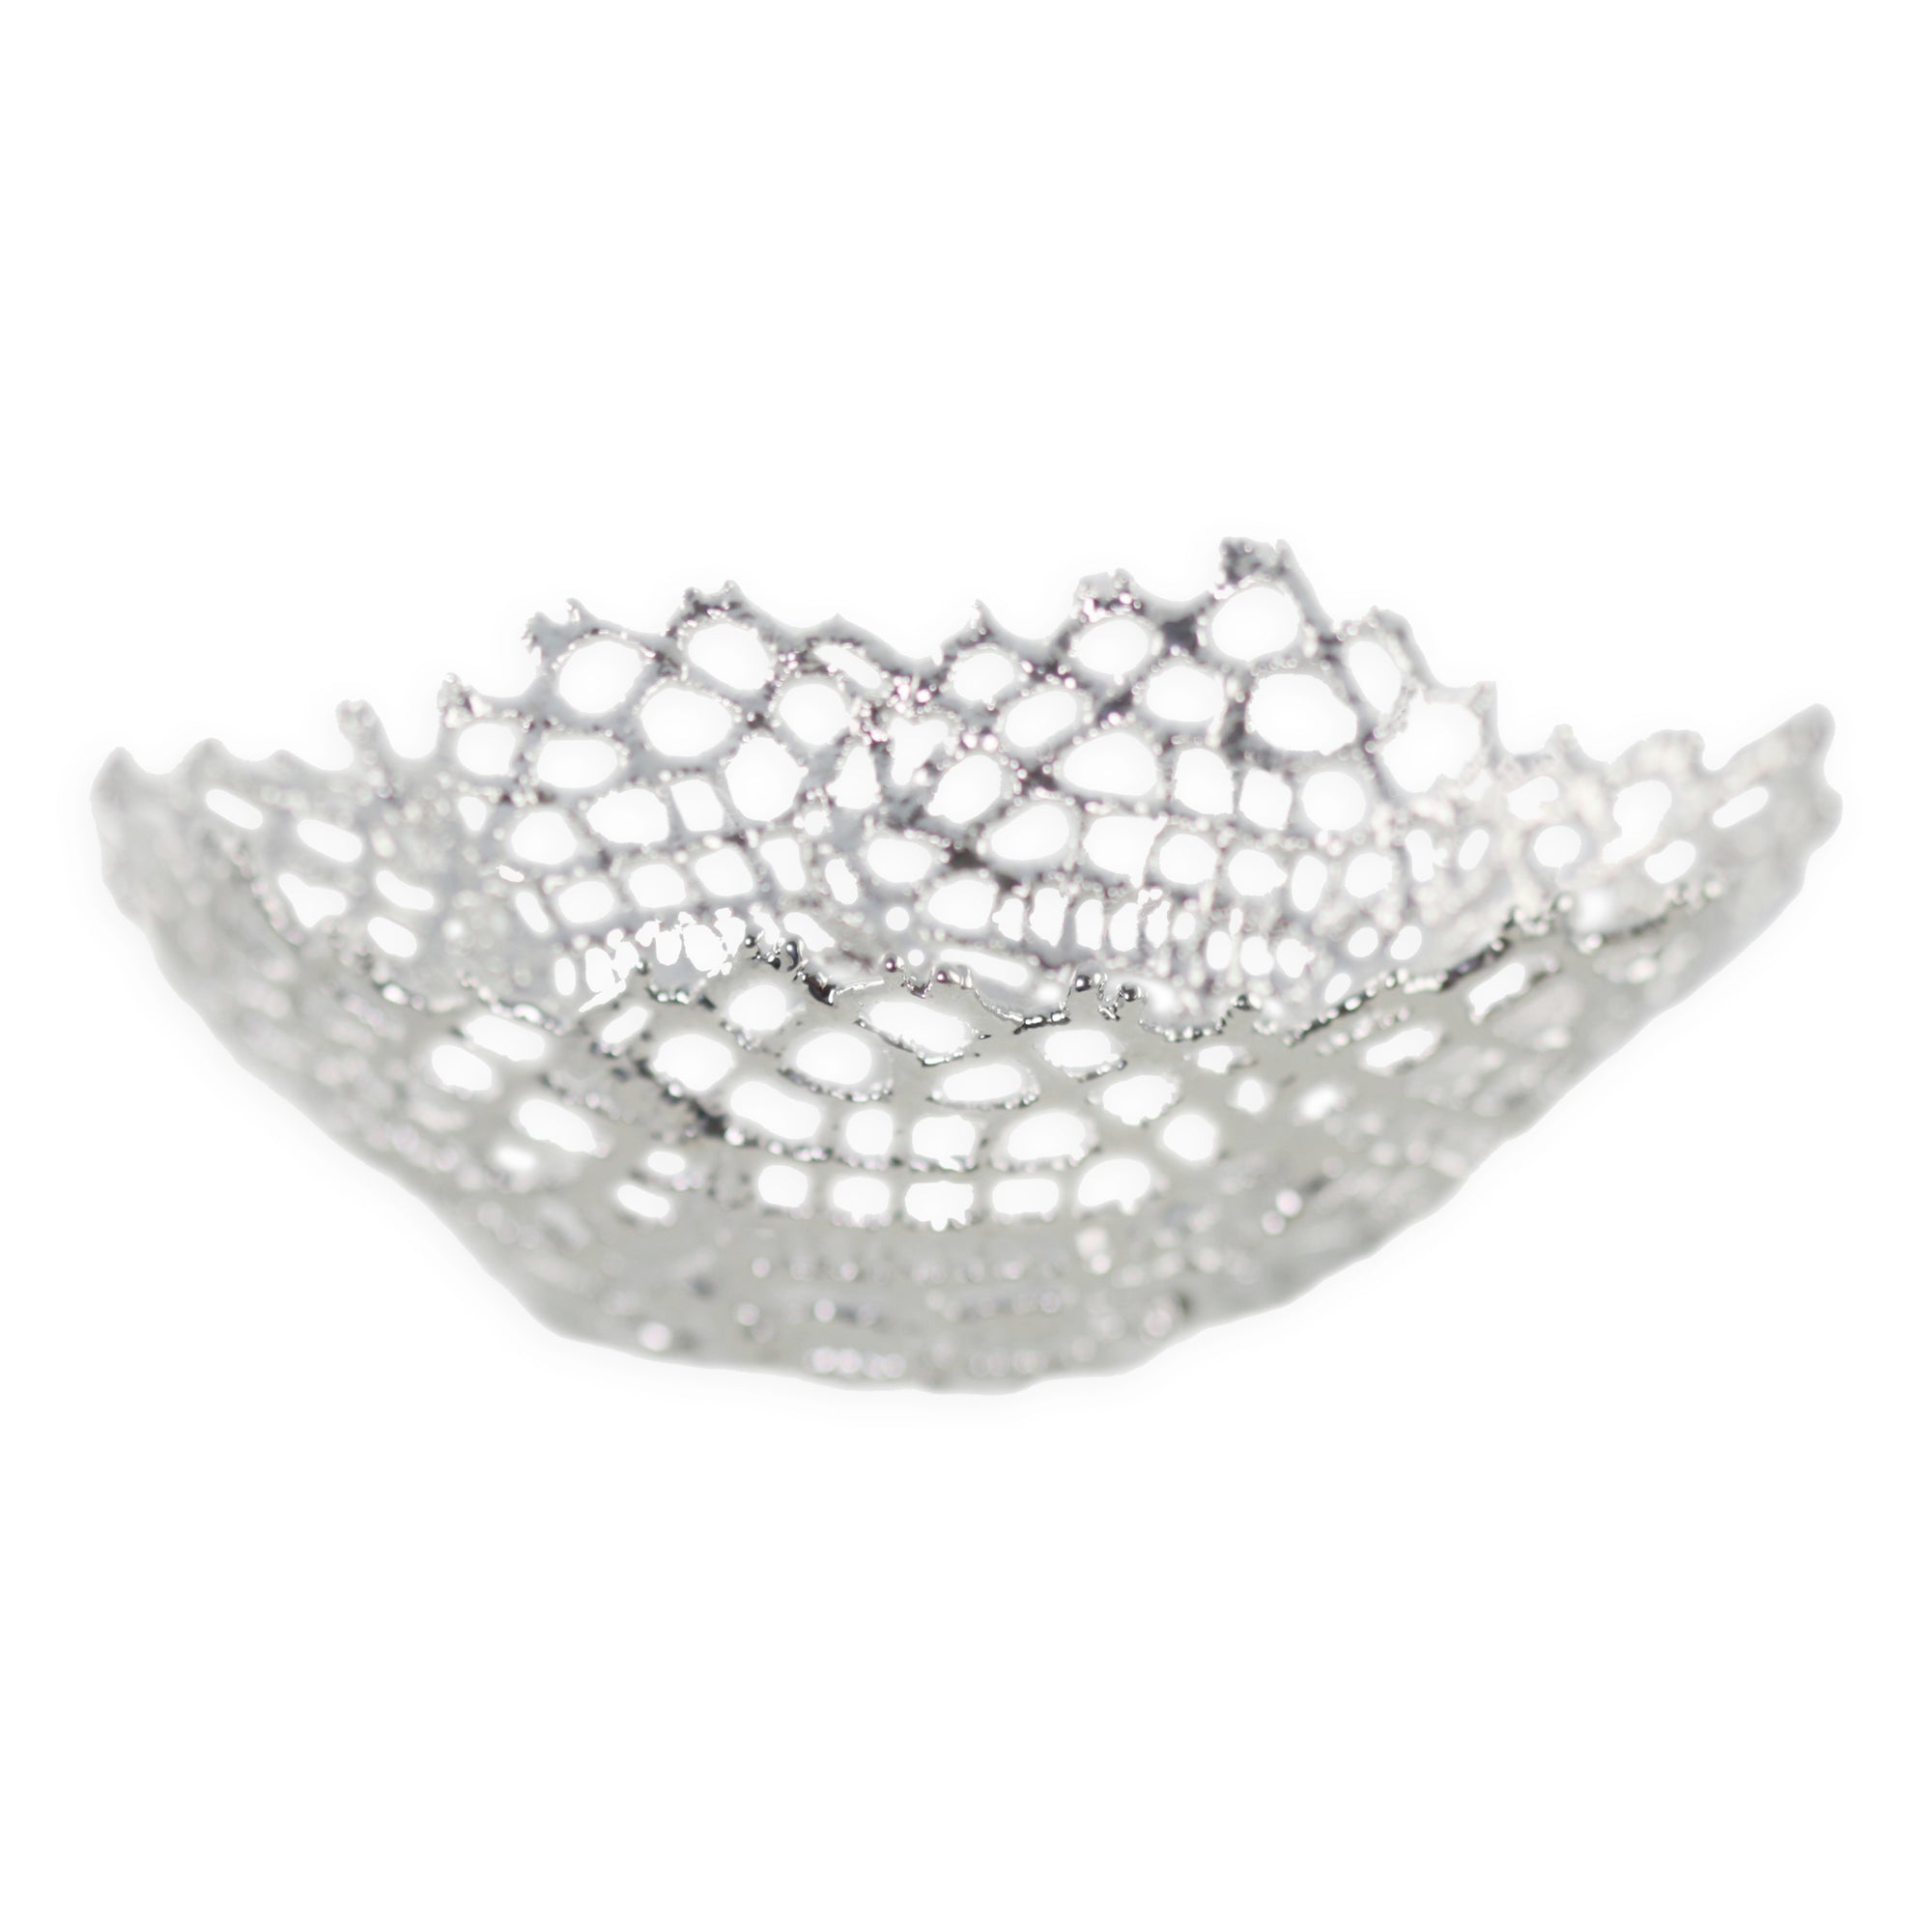 Lace crown head piece in sterling silver worn by a model.